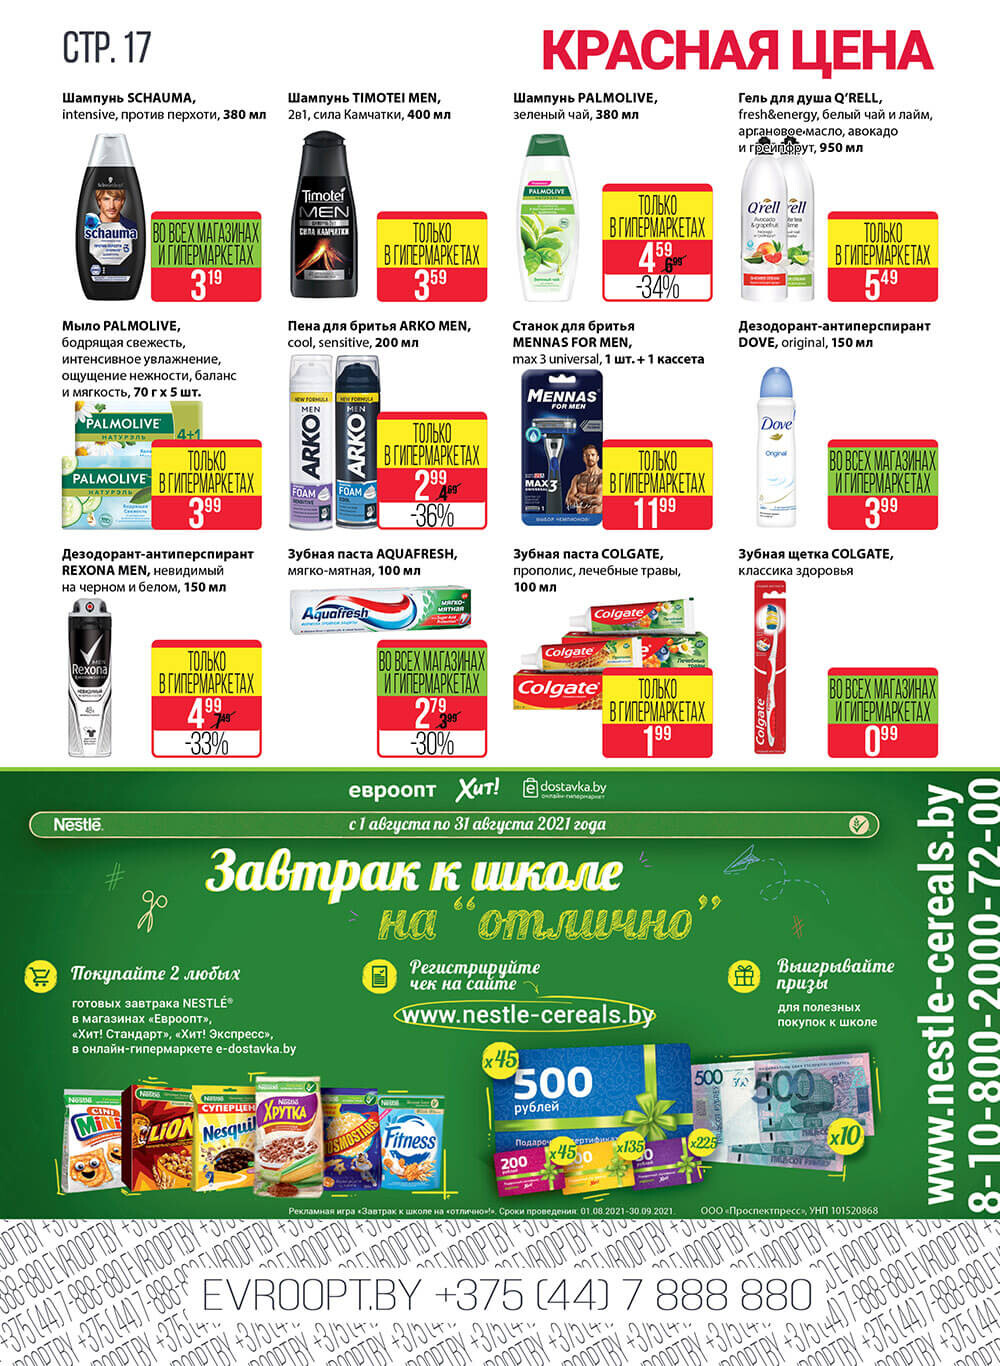 Каталог (листовка) акции "Красная цена" Евроопт с 9 по 22 августа 2021 года